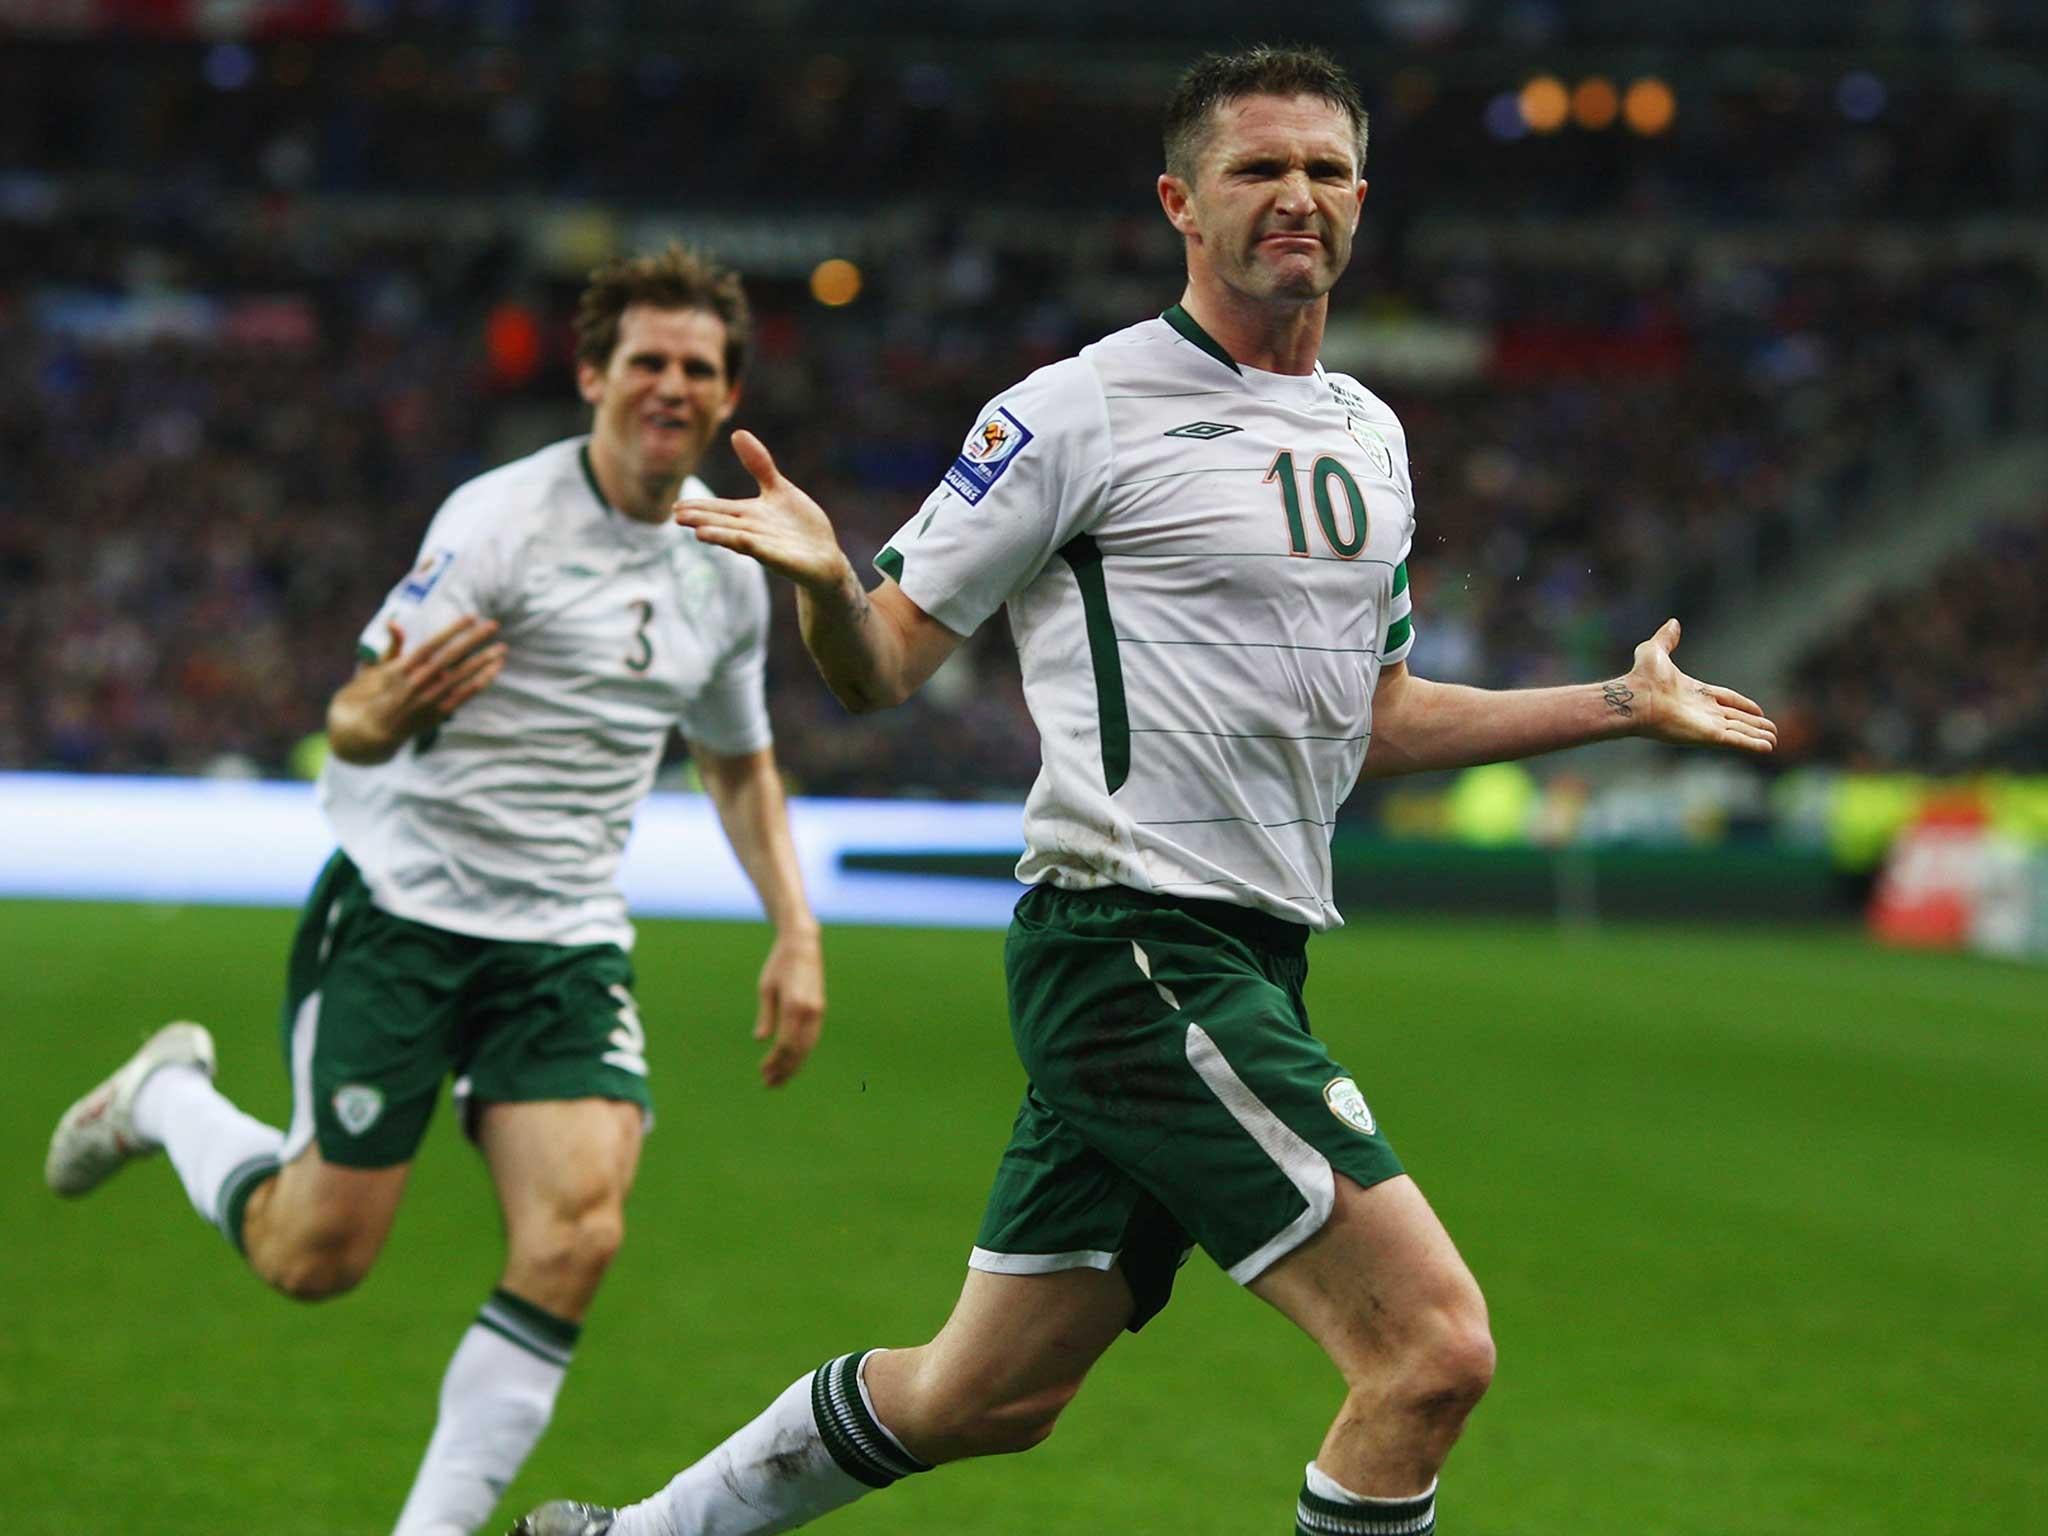 Robbie Keane scored on that fateful night in Paris